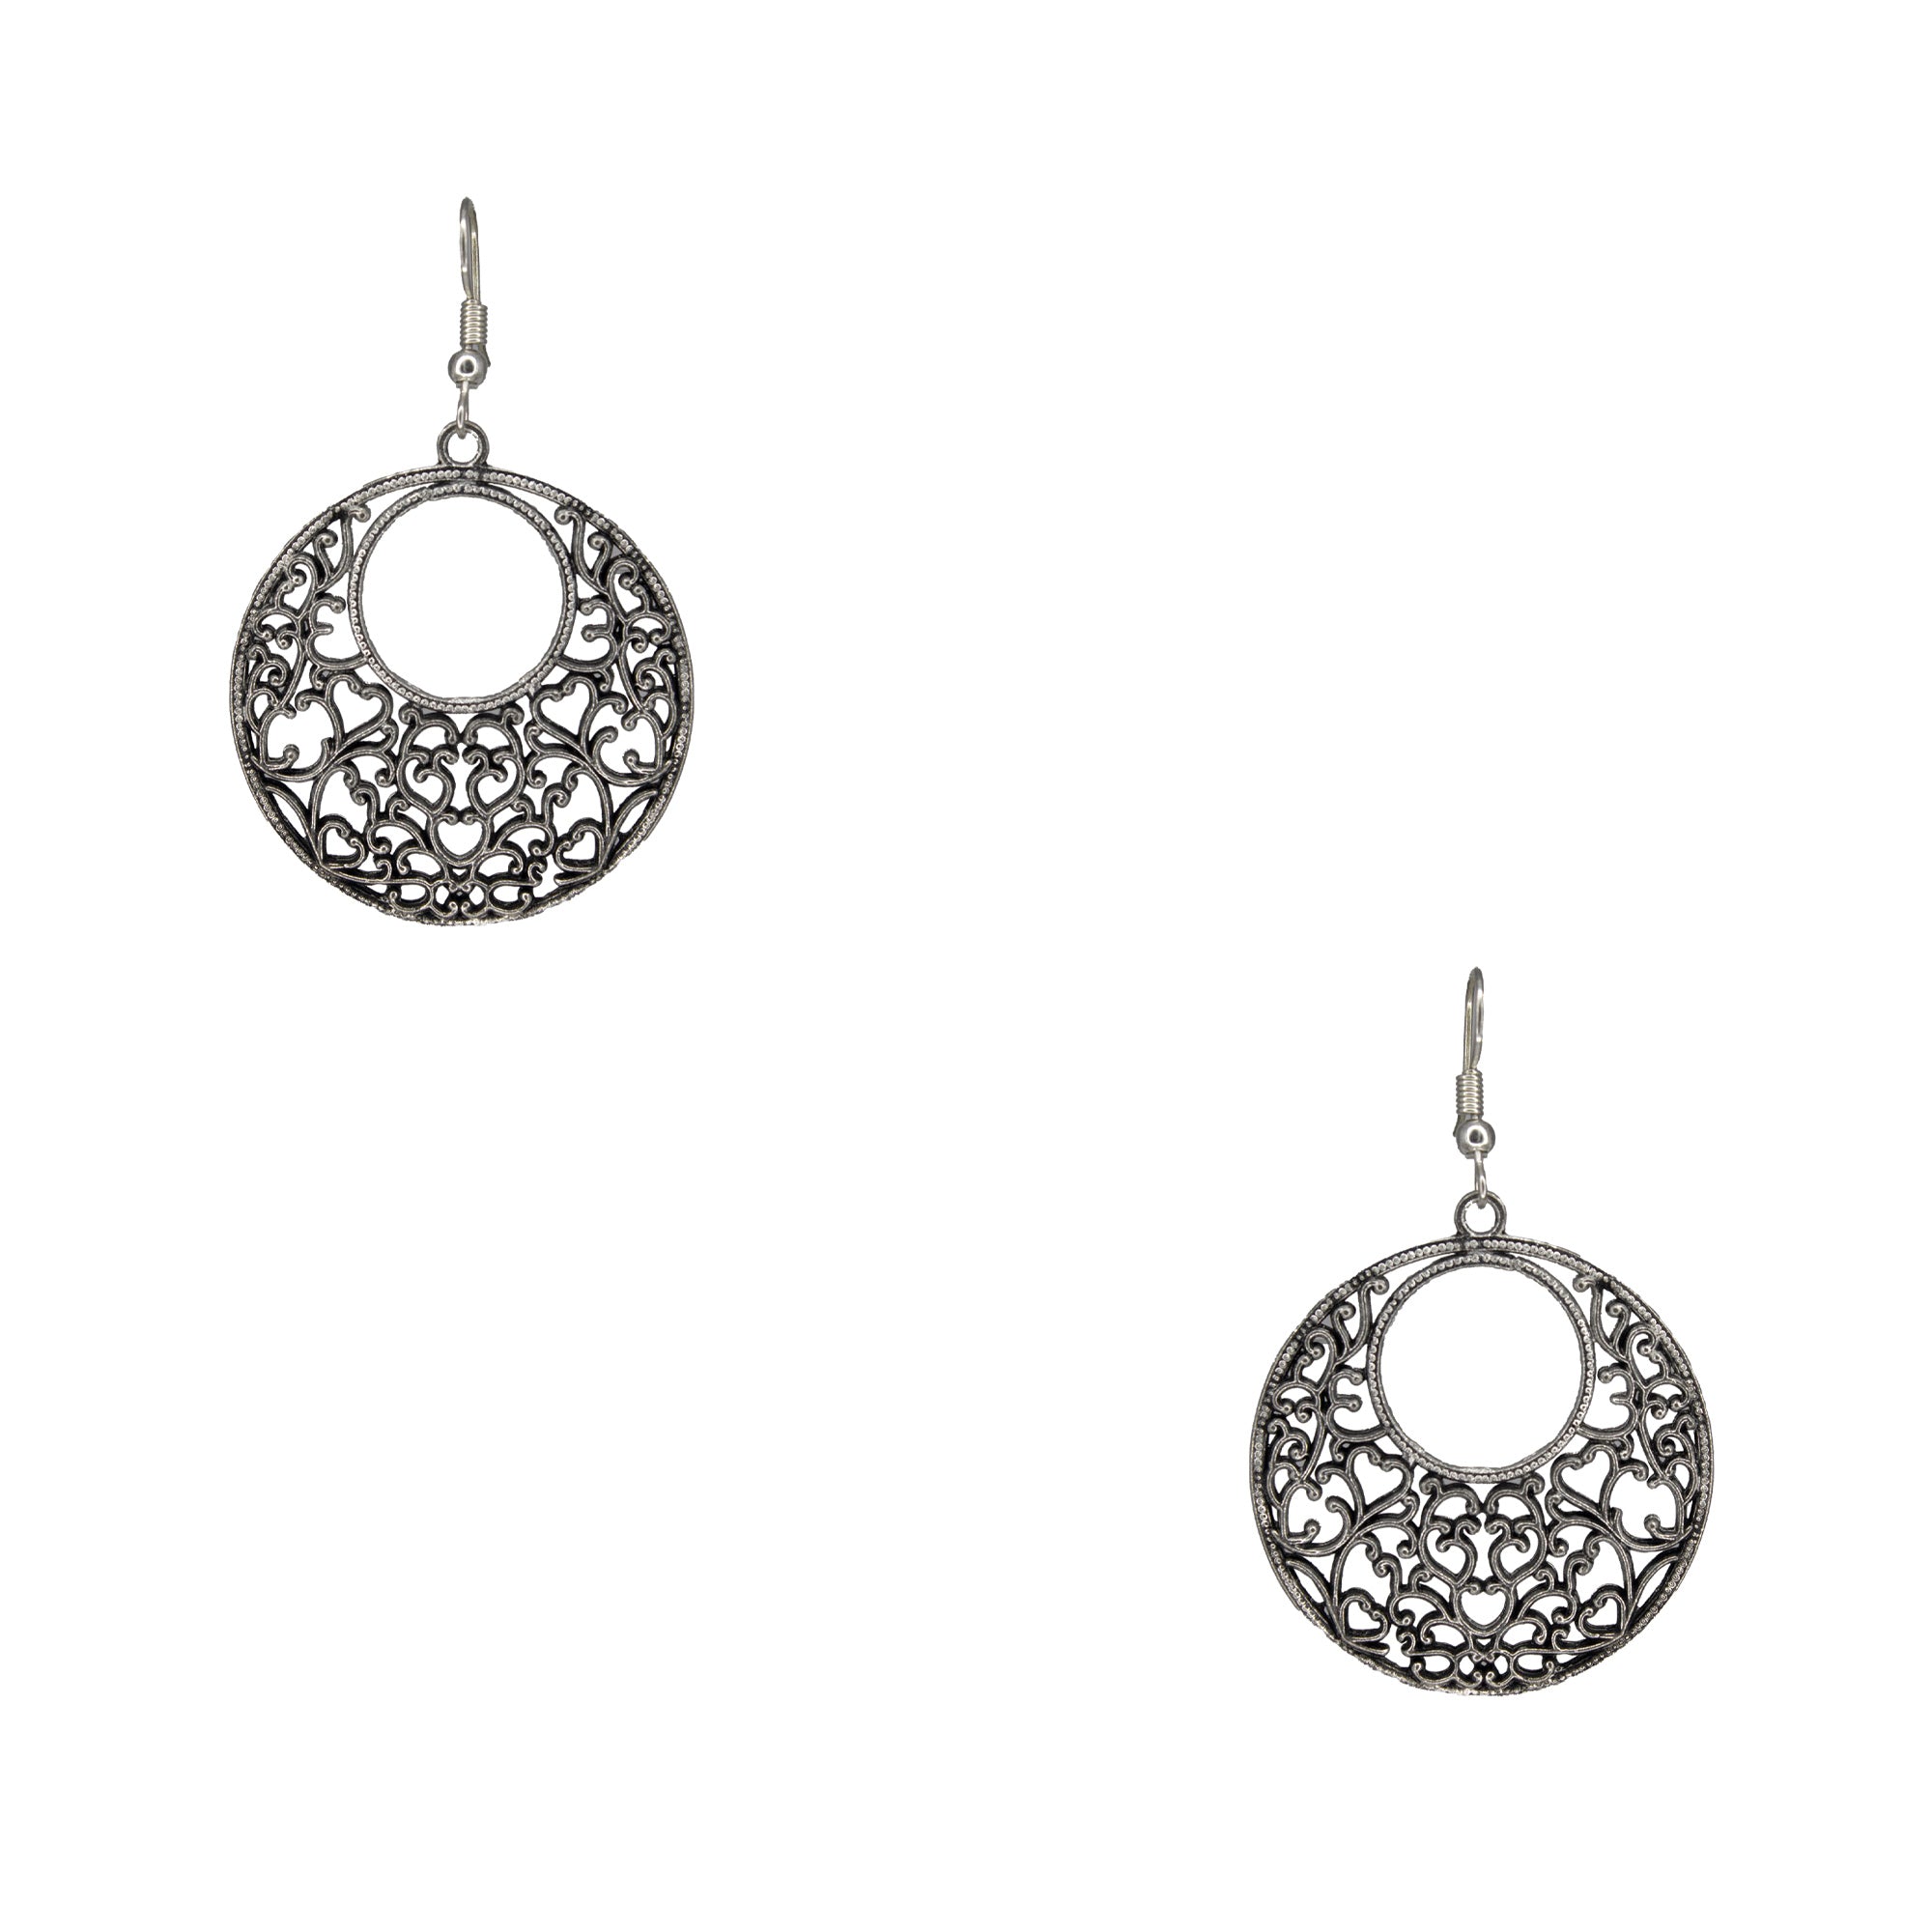 Abhinn Silver Oxidised Western Floral Design Hoops Earrings For Girls